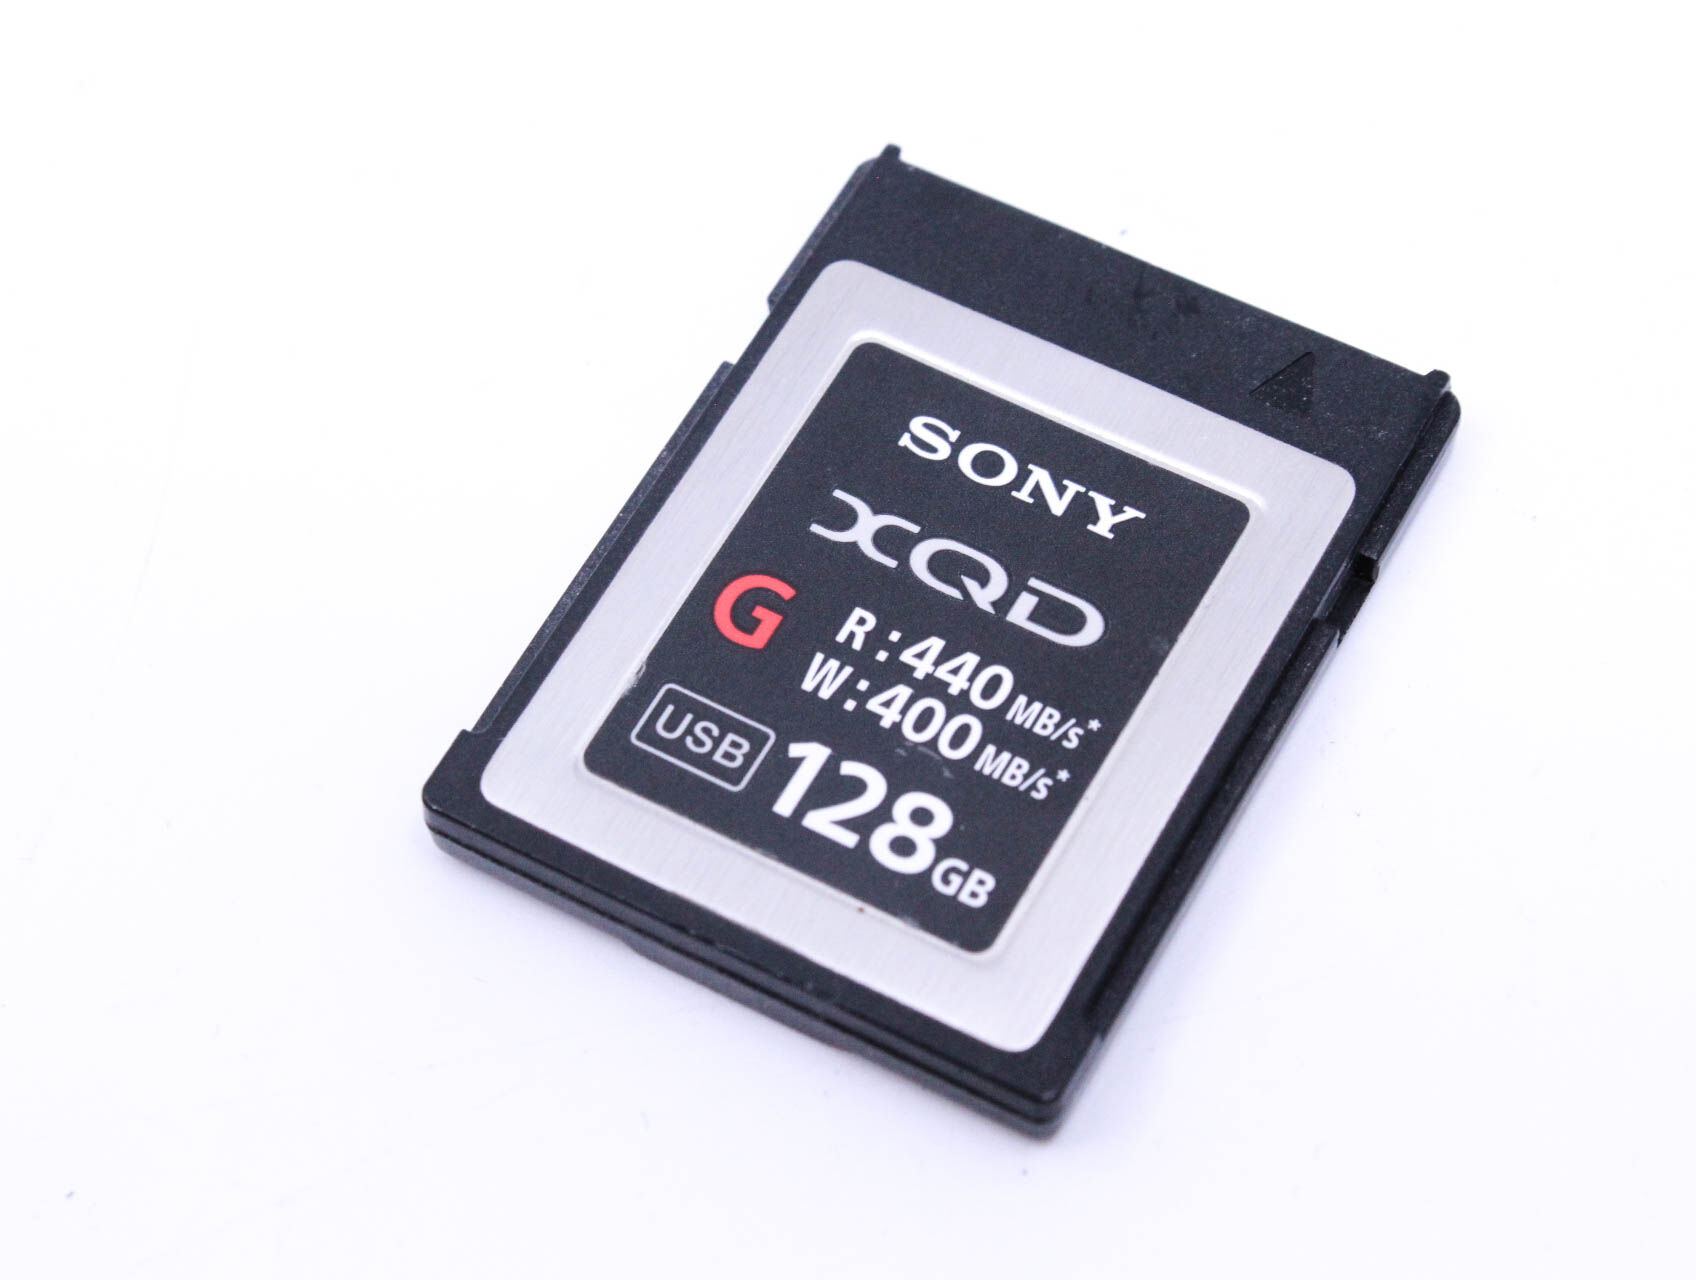 Used Sony XQD G 128GB 400MB/s Card